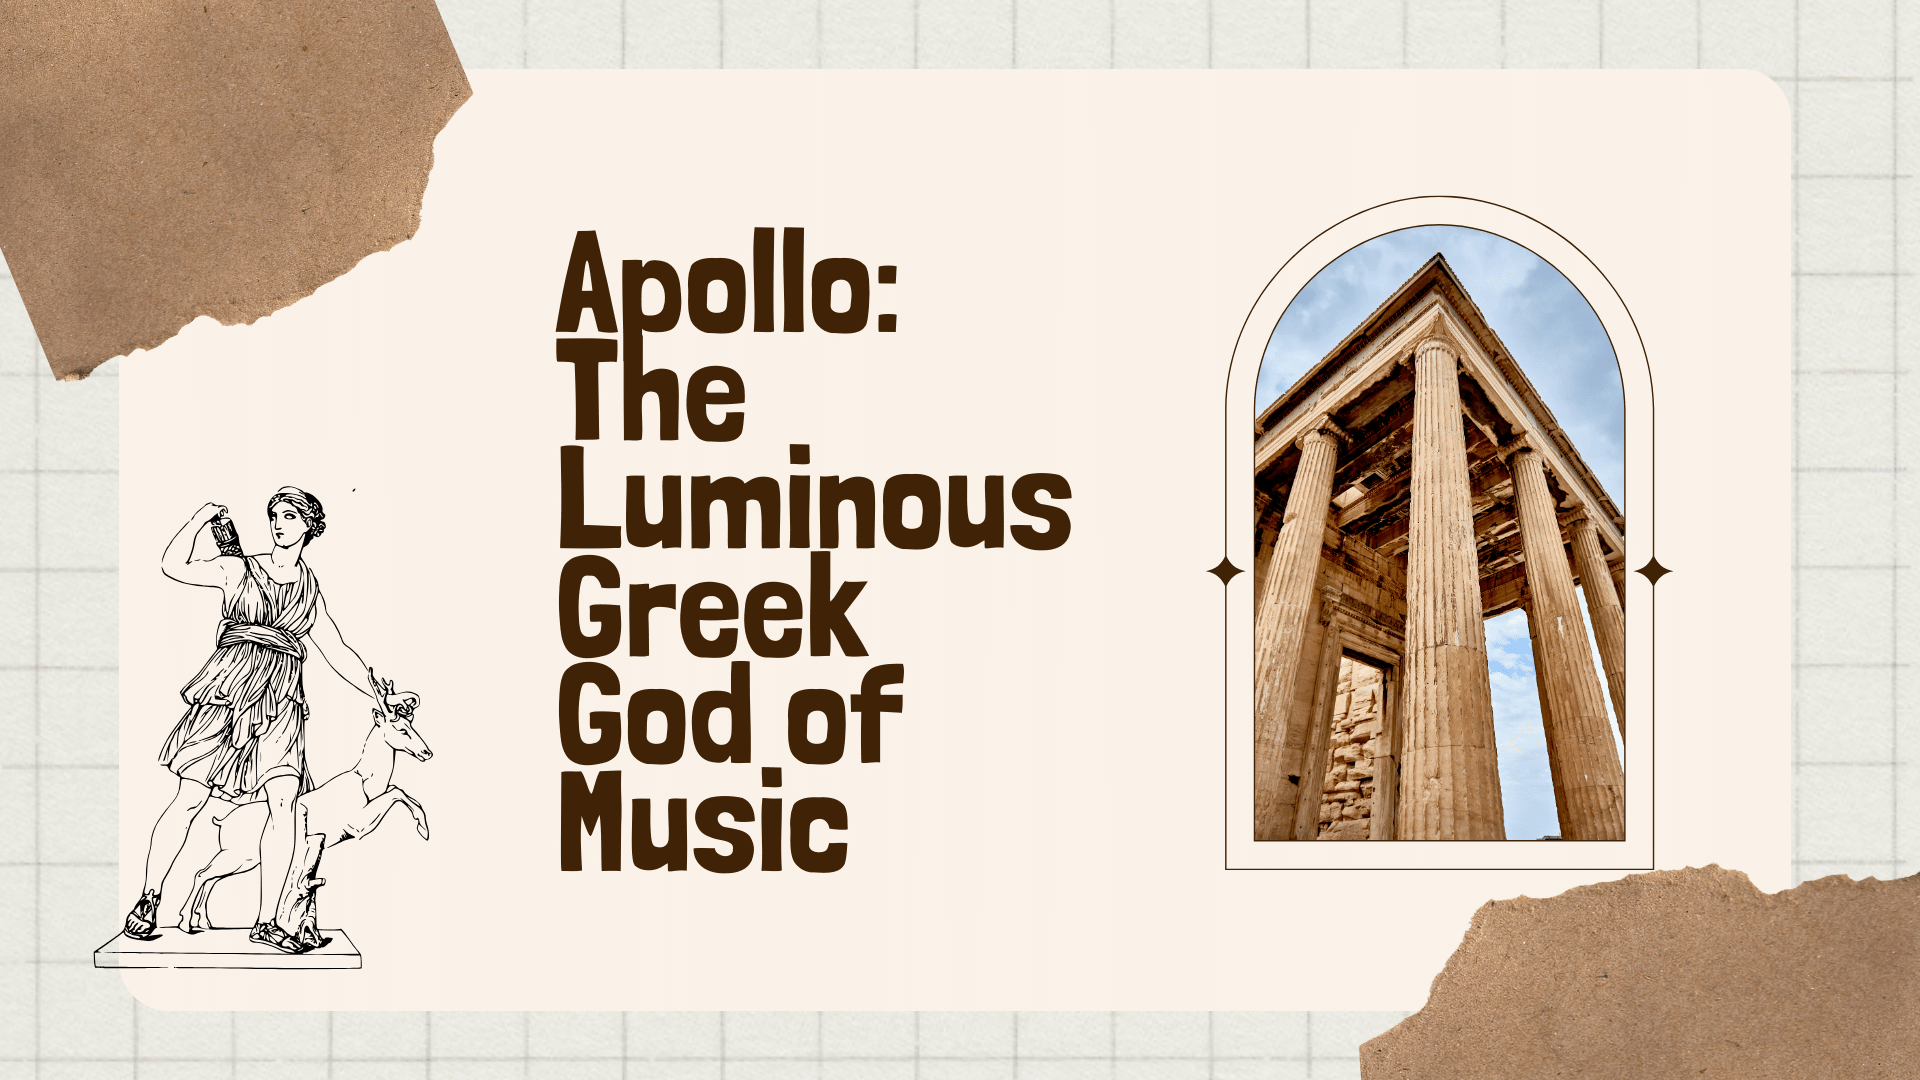 Apollo: The Luminous Greek God of Music